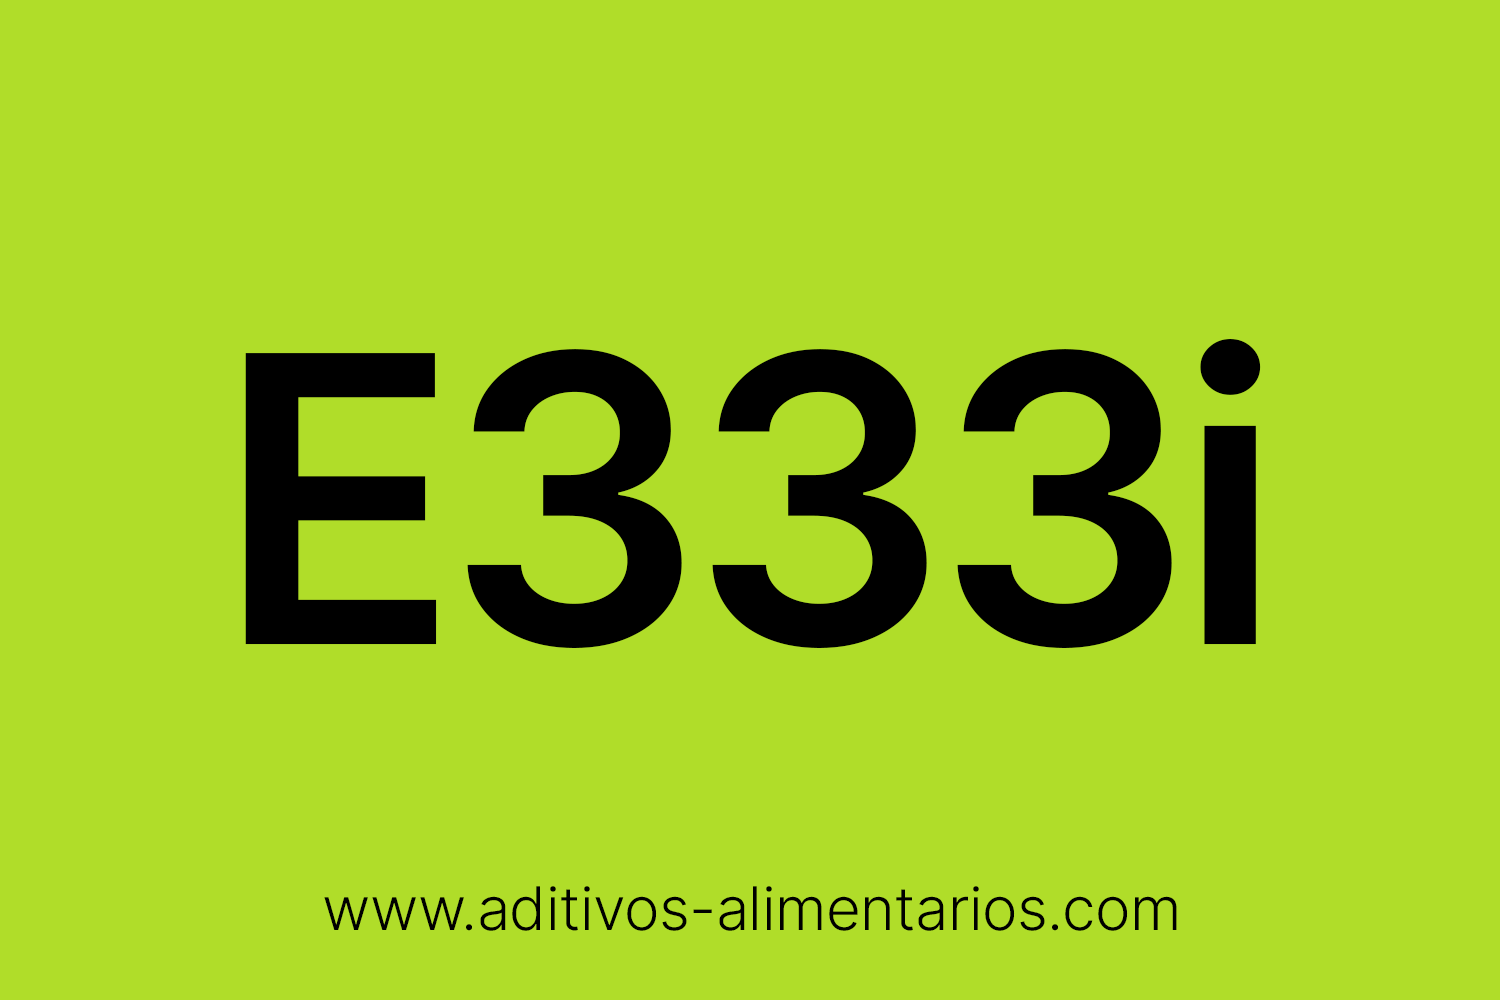 Aditivo Alimentario - E333i - Citrato Monocálcico